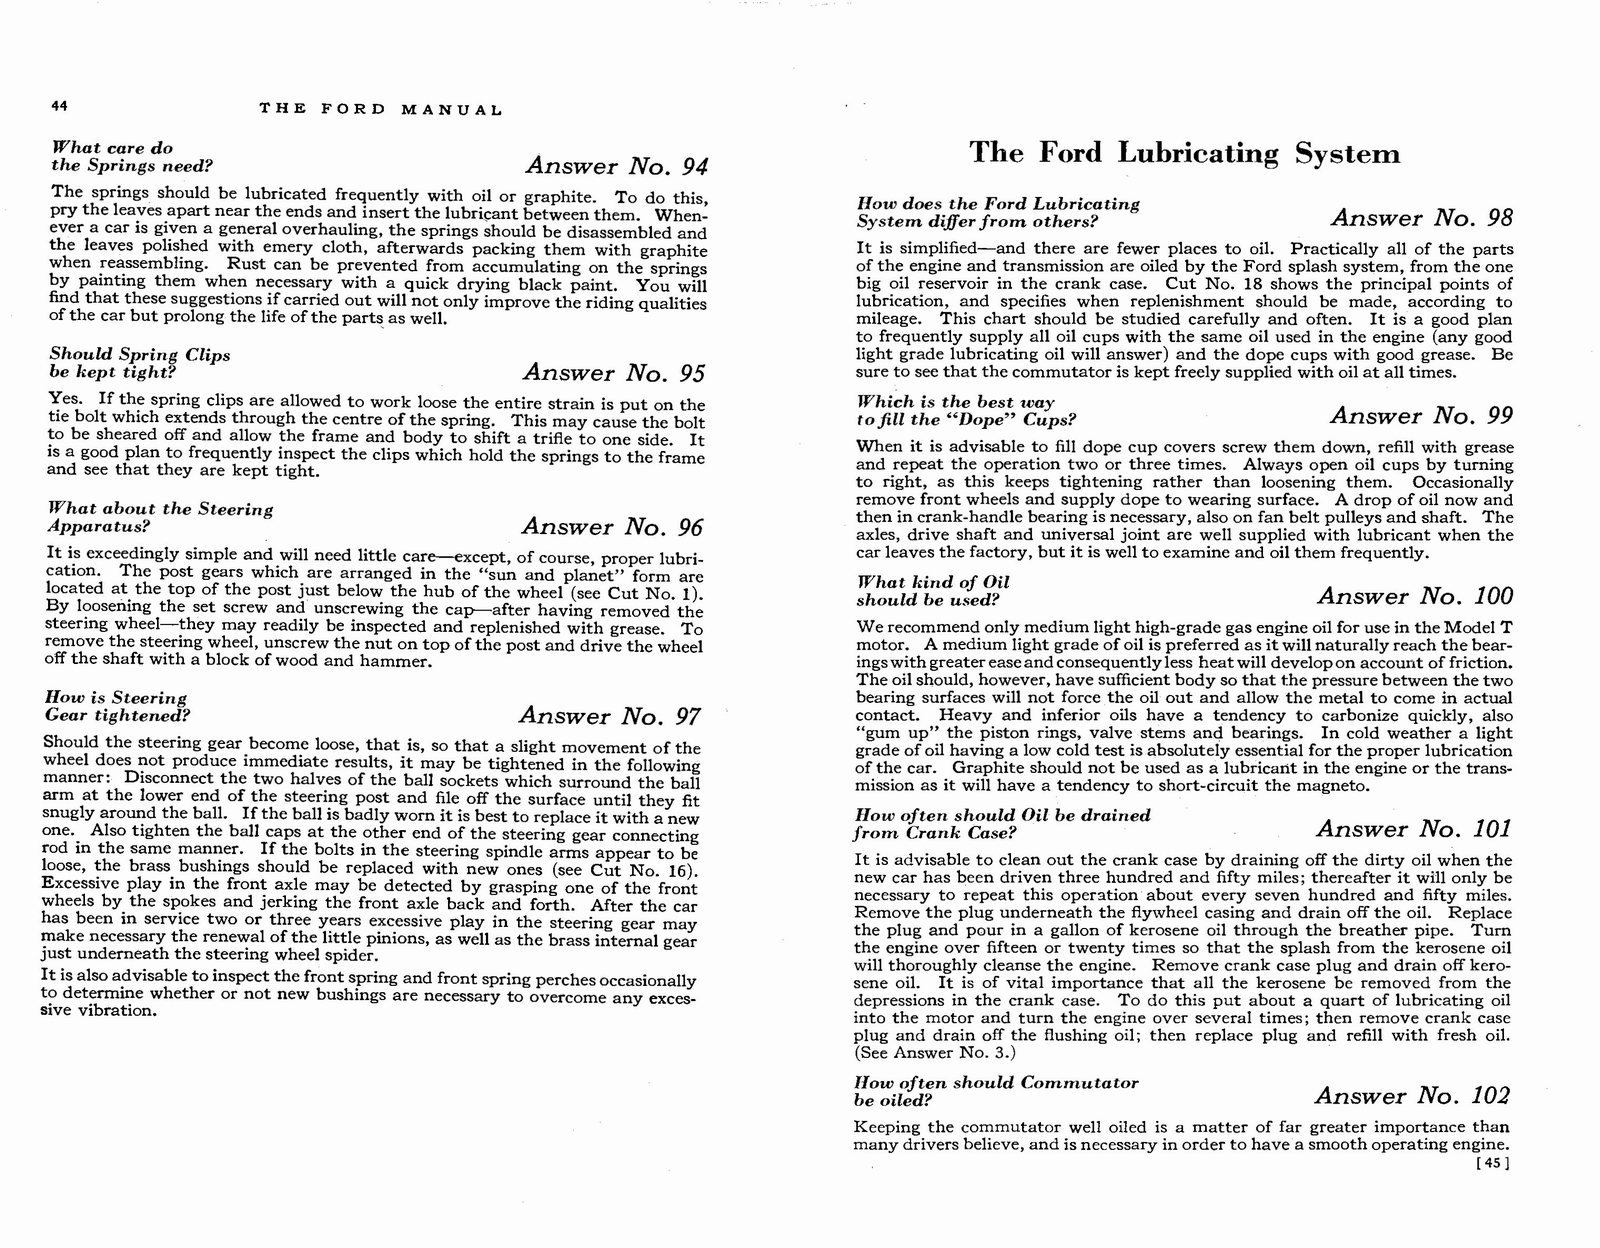 n_1925 Ford Owners Manual-44-45.jpg